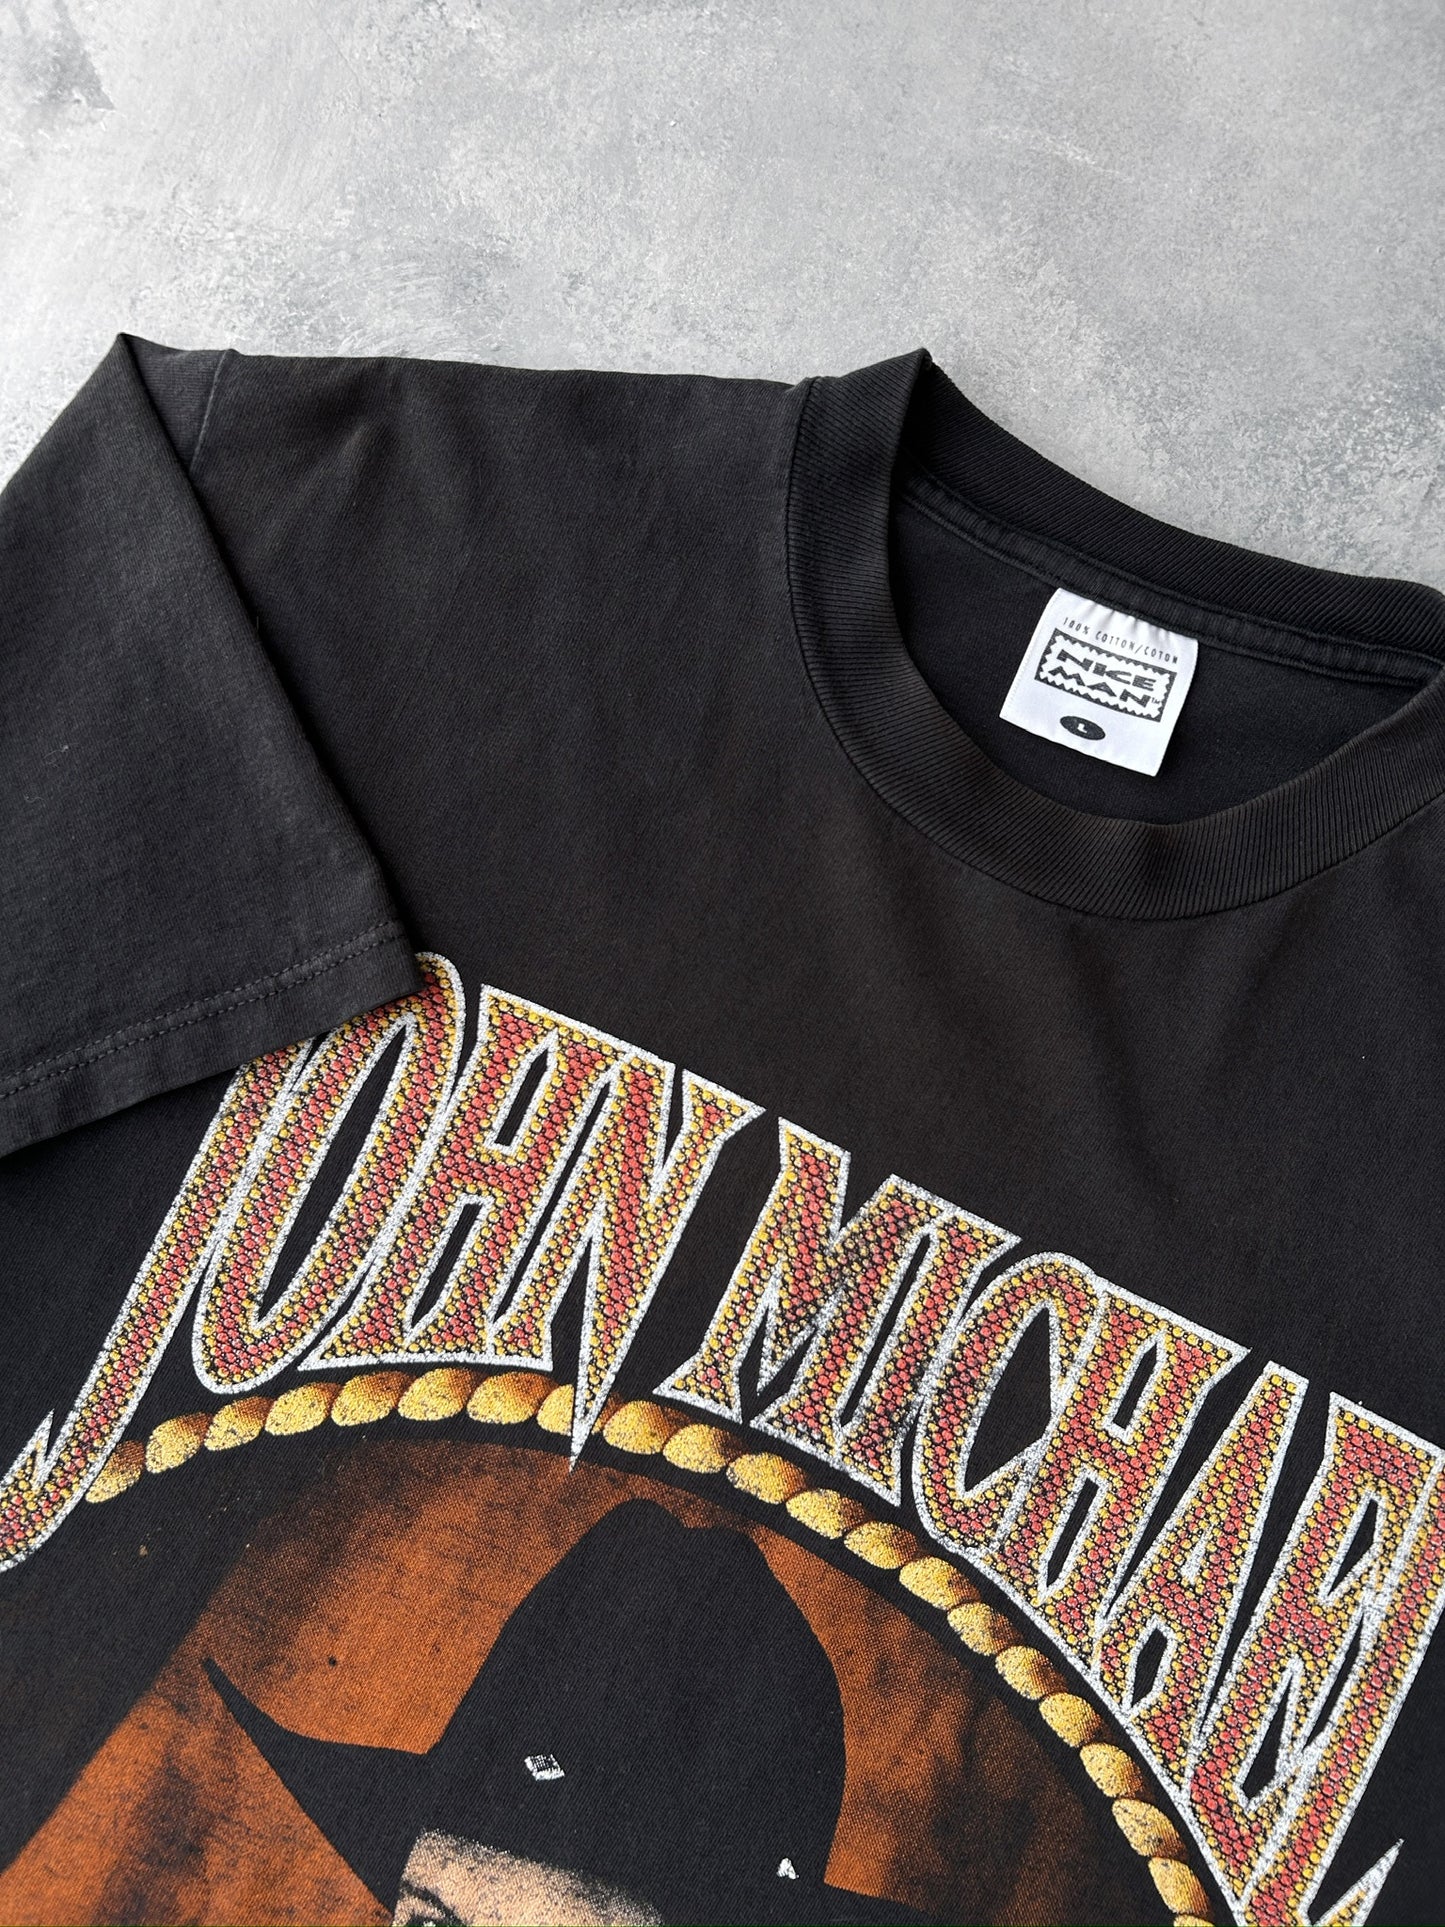 John Michael Montgomery T-Shirt '94 - Large